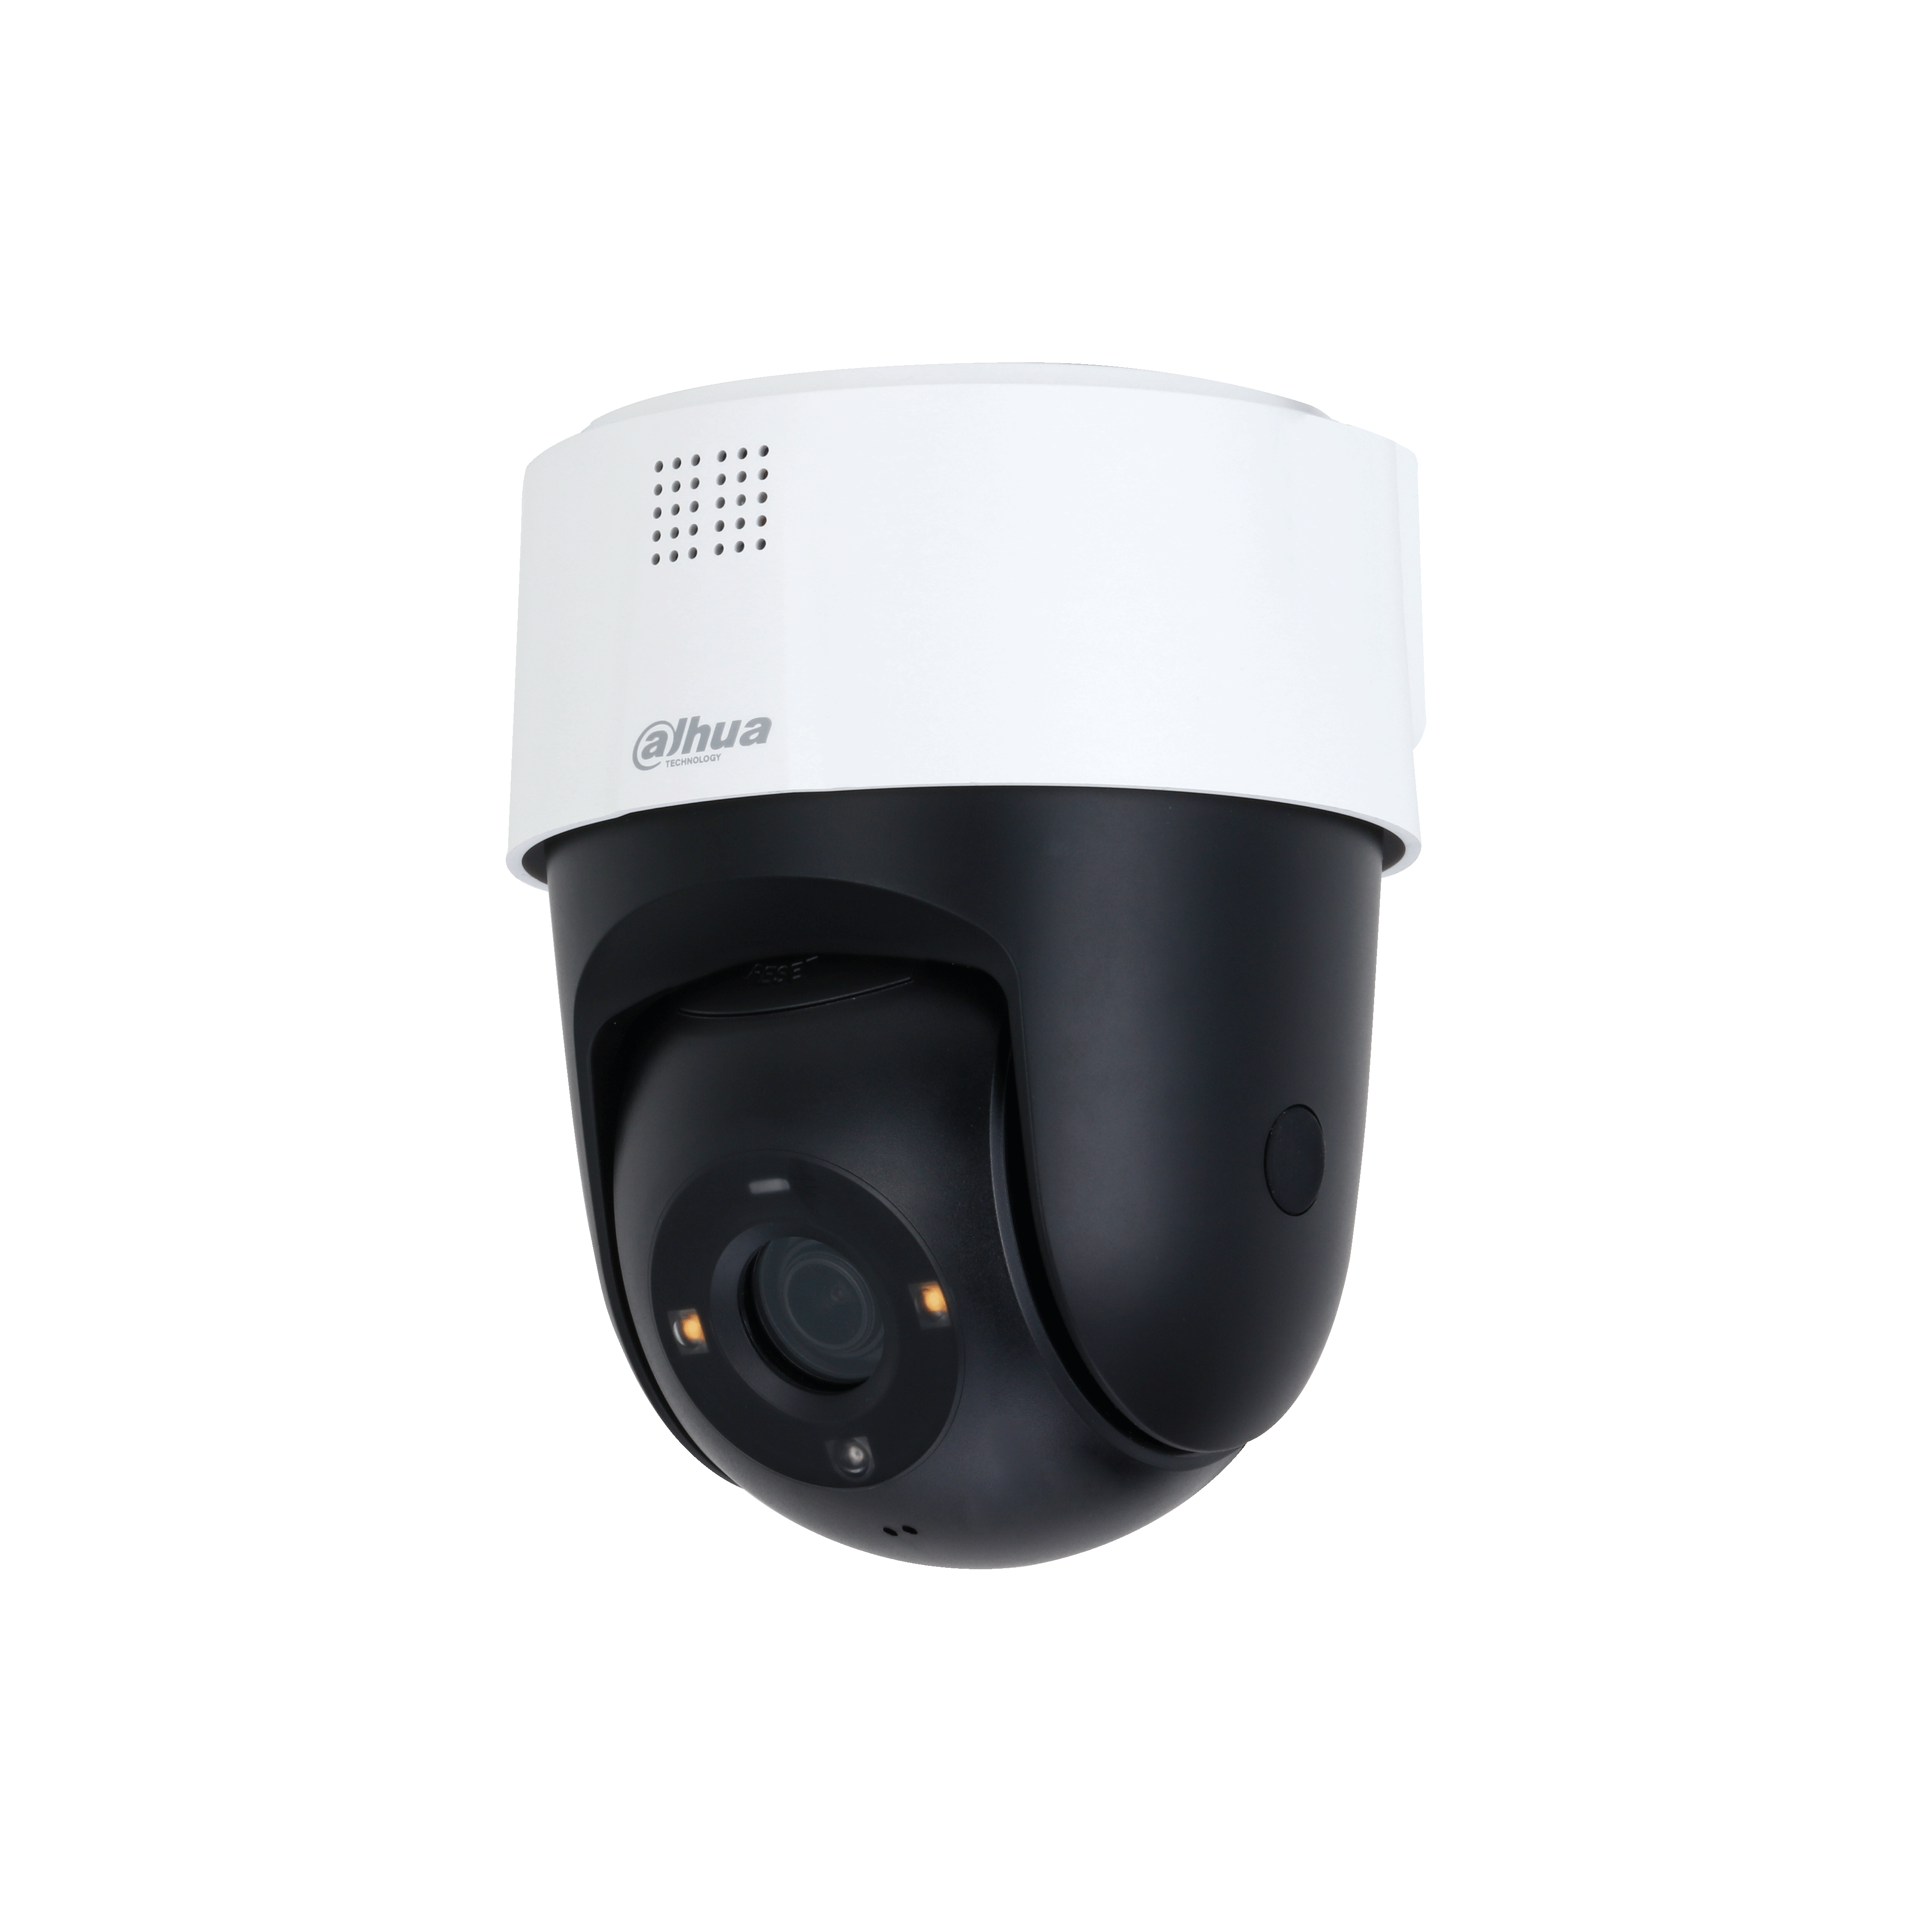 DAHUA SD2A500-GN-A-PV 5 MP IR and White Light Full-color Network PT Camera